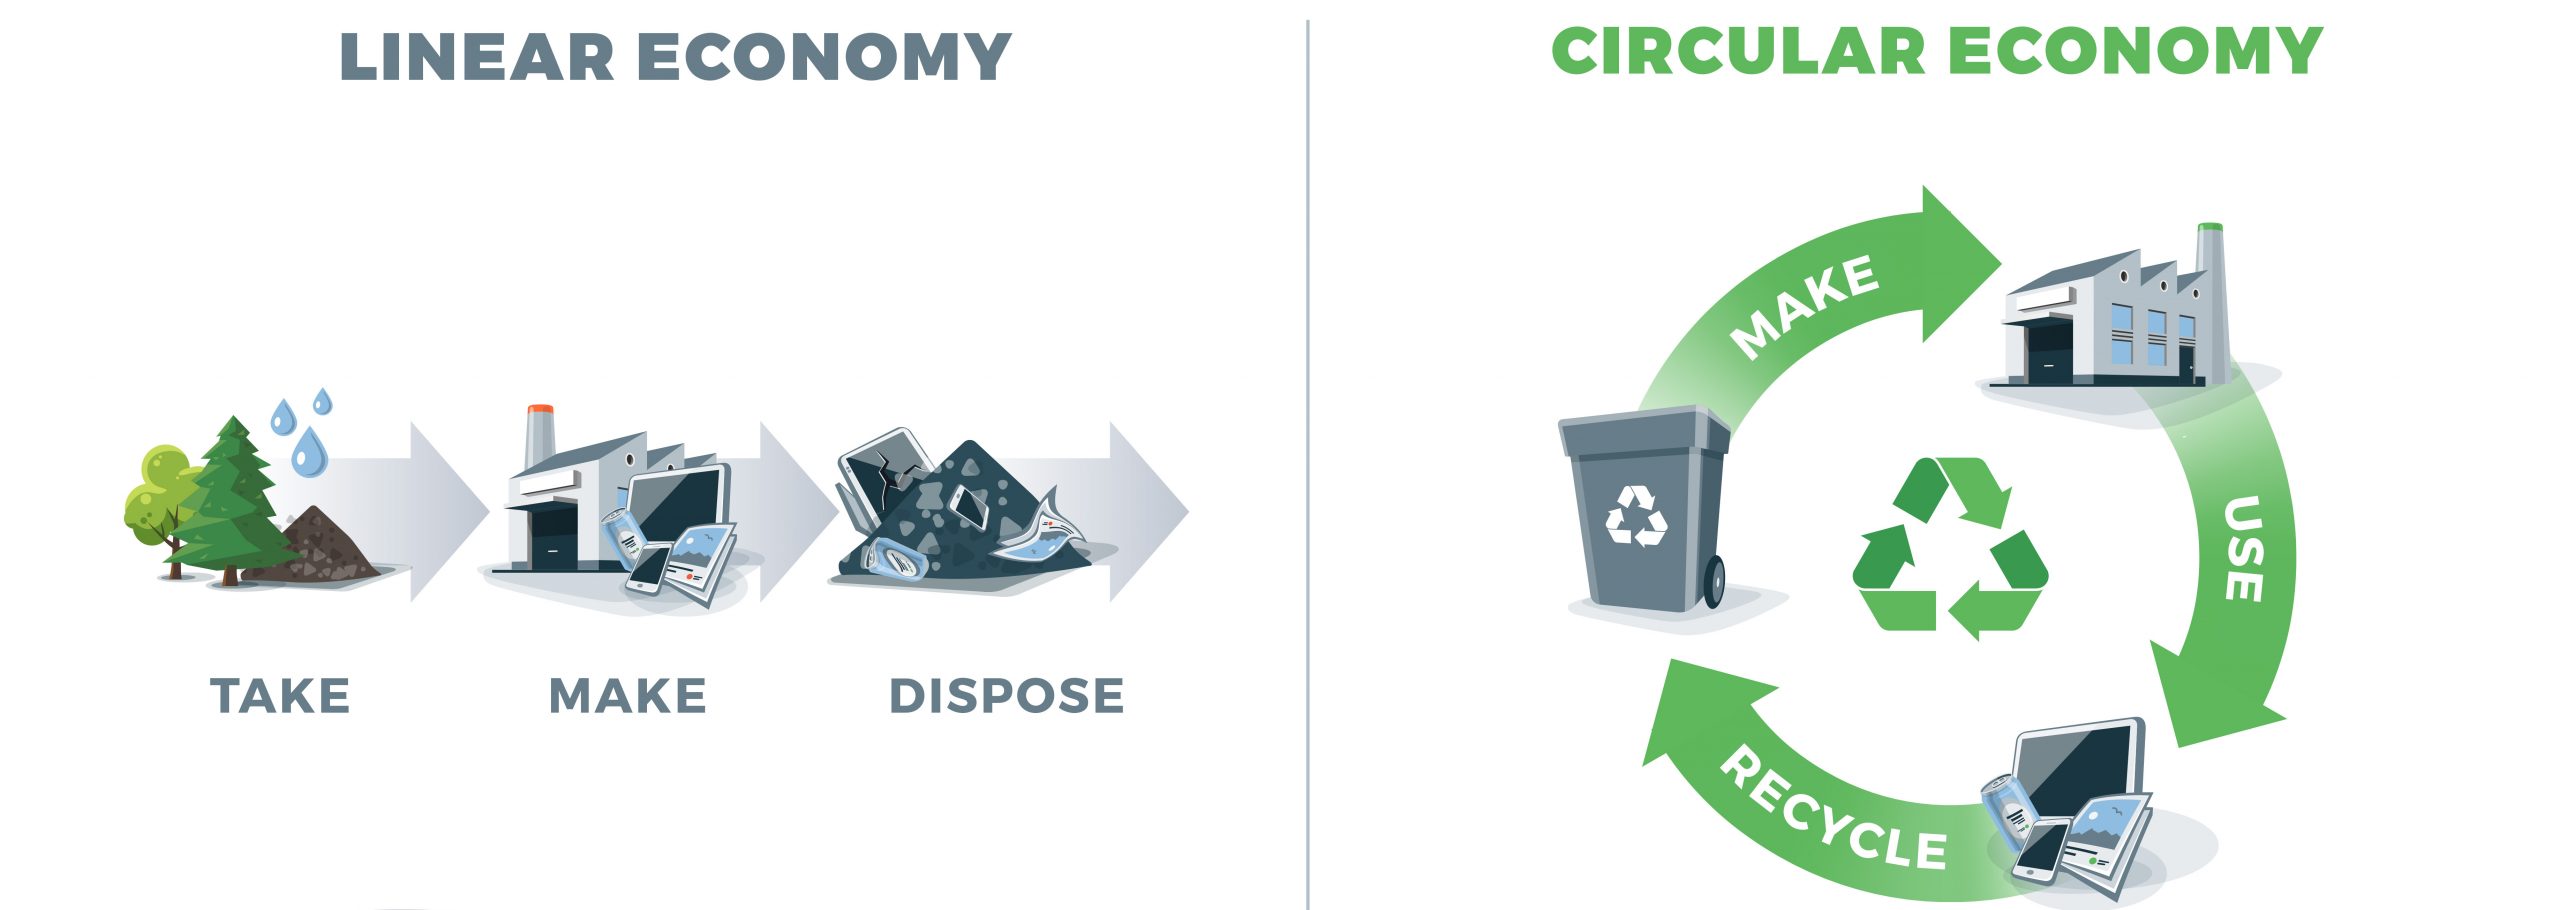 Weekly Sustainability Tip: Re-think waste - upcycle! | Sustainability